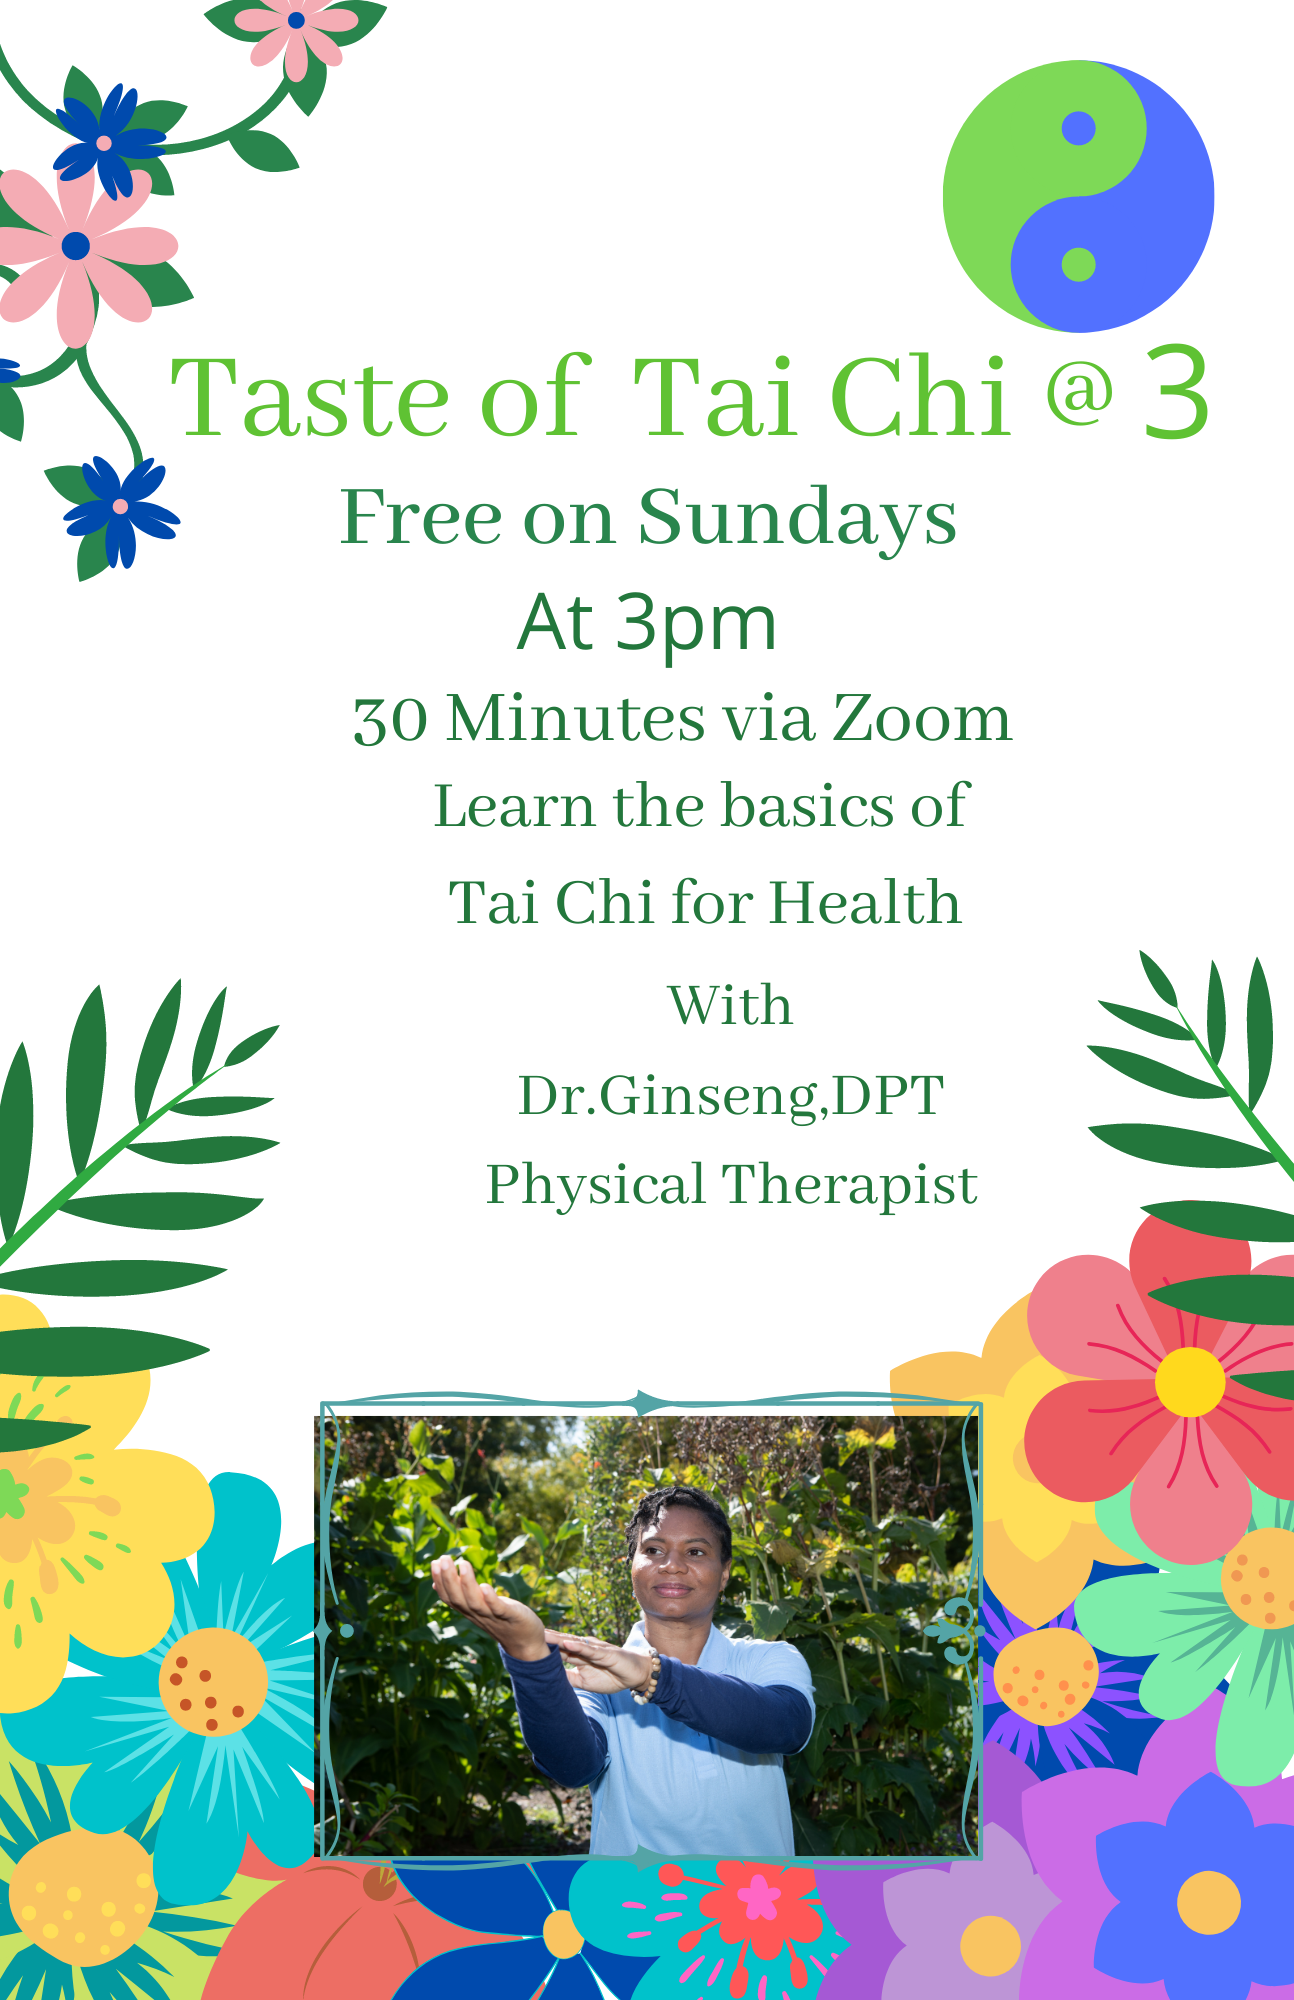 Taste of Tai Chi at 3